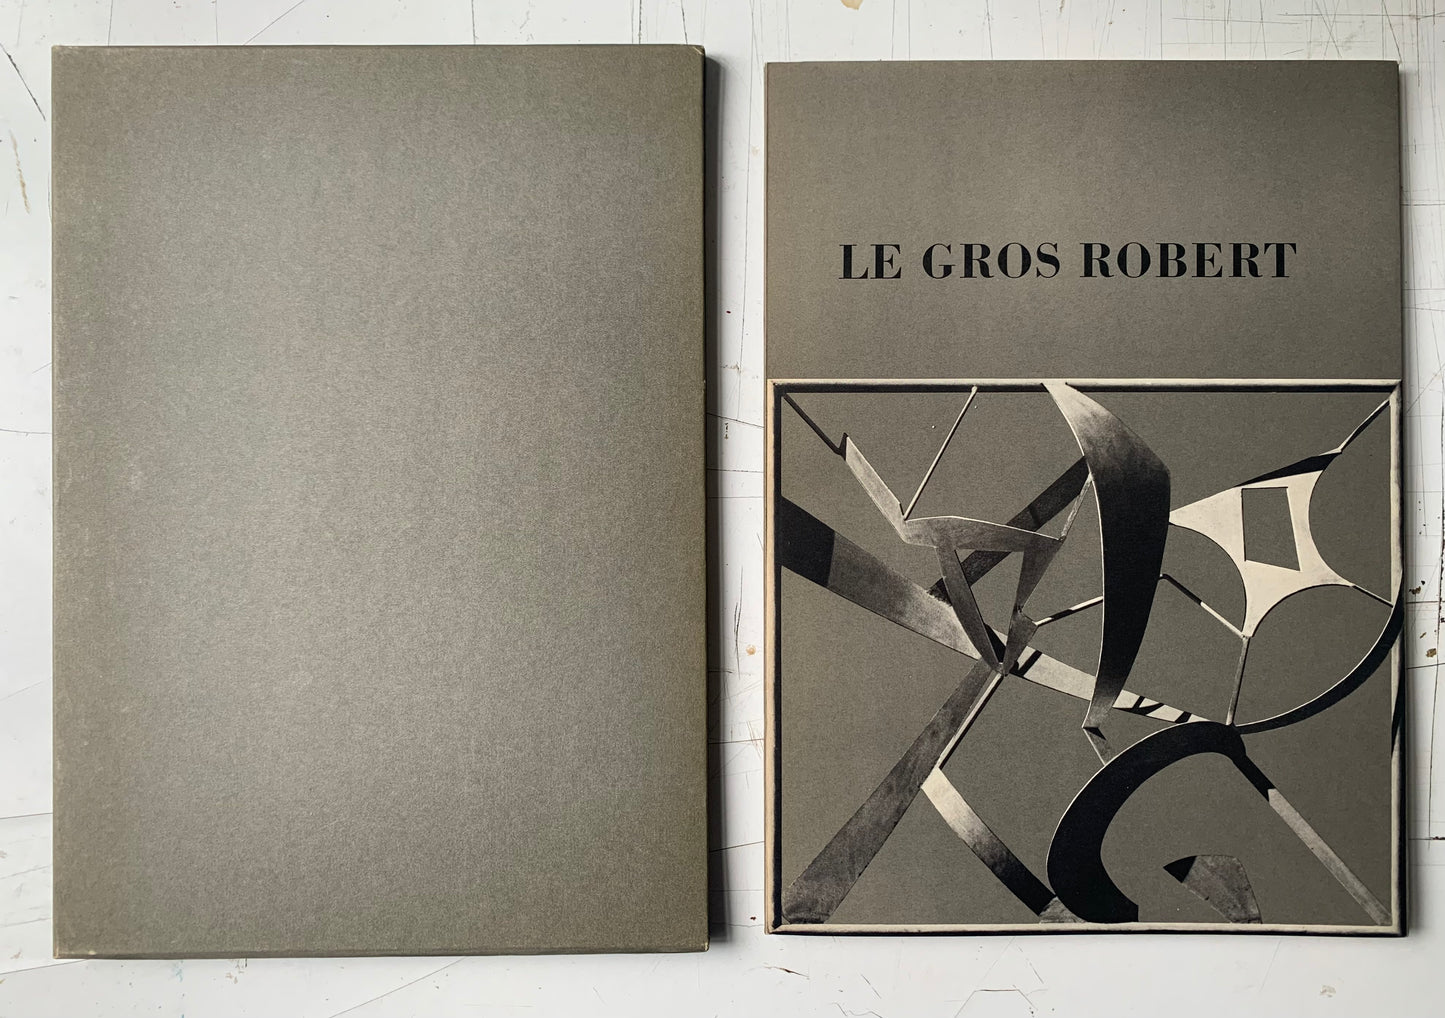 Jean Dewasne. "Le Gros Robert", 1950